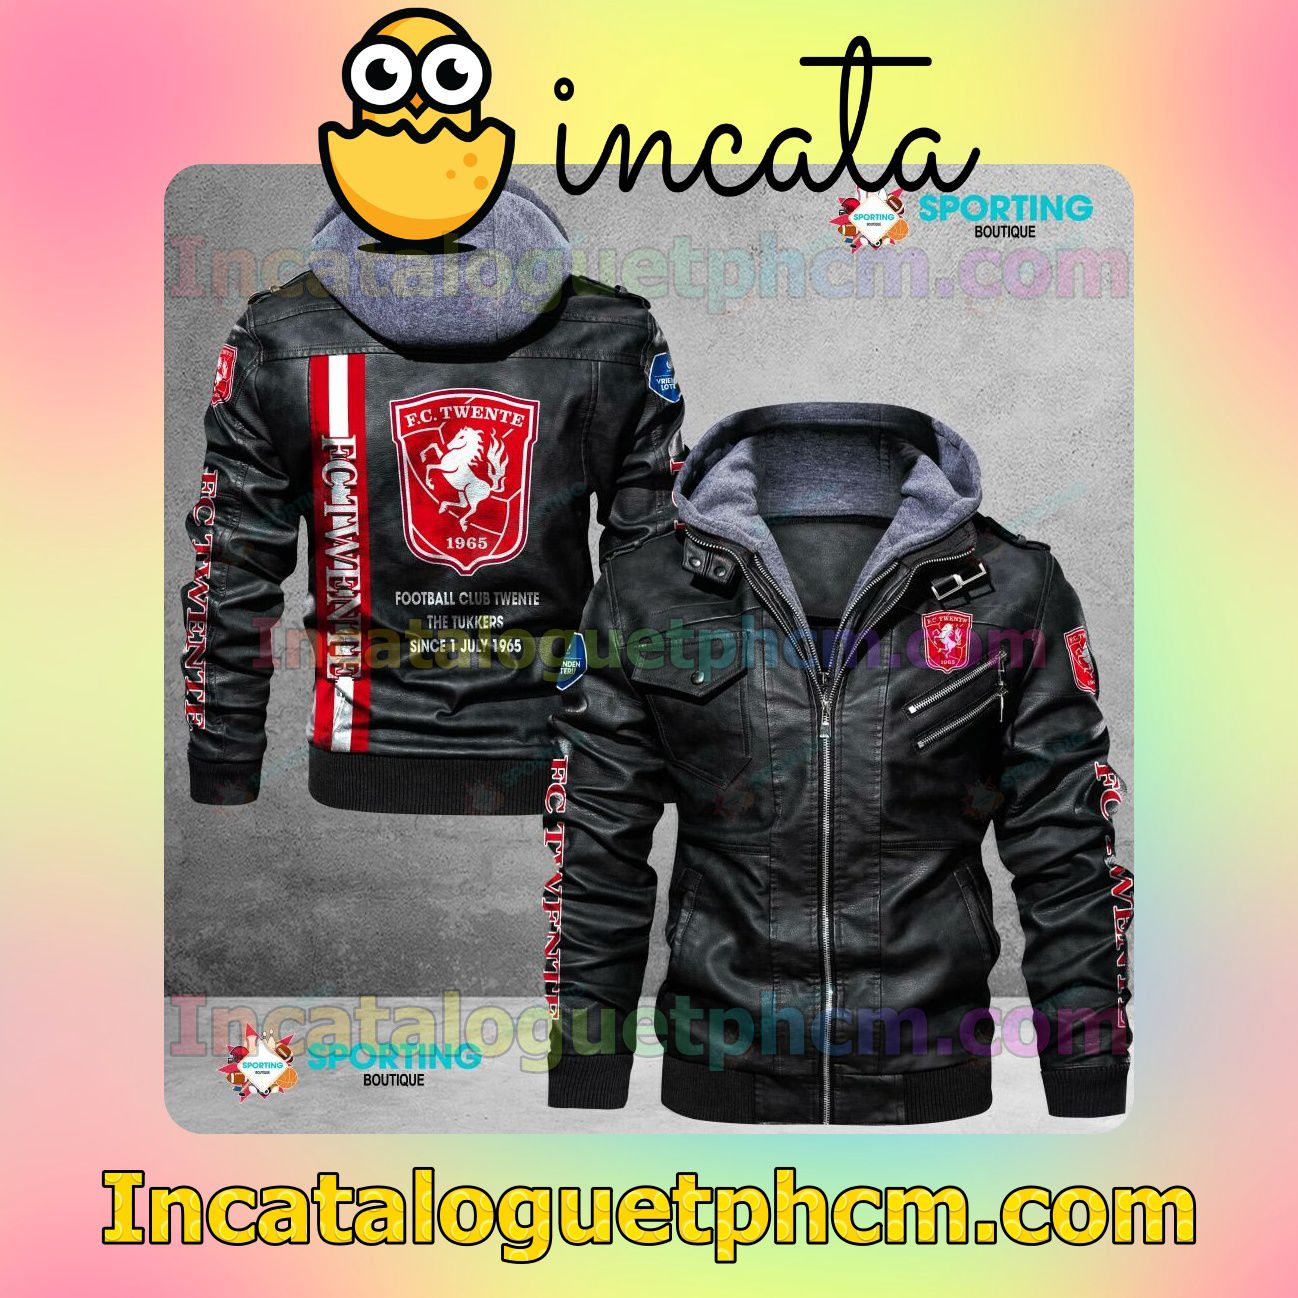 FC Twente Brand Uniform Leather Jacket